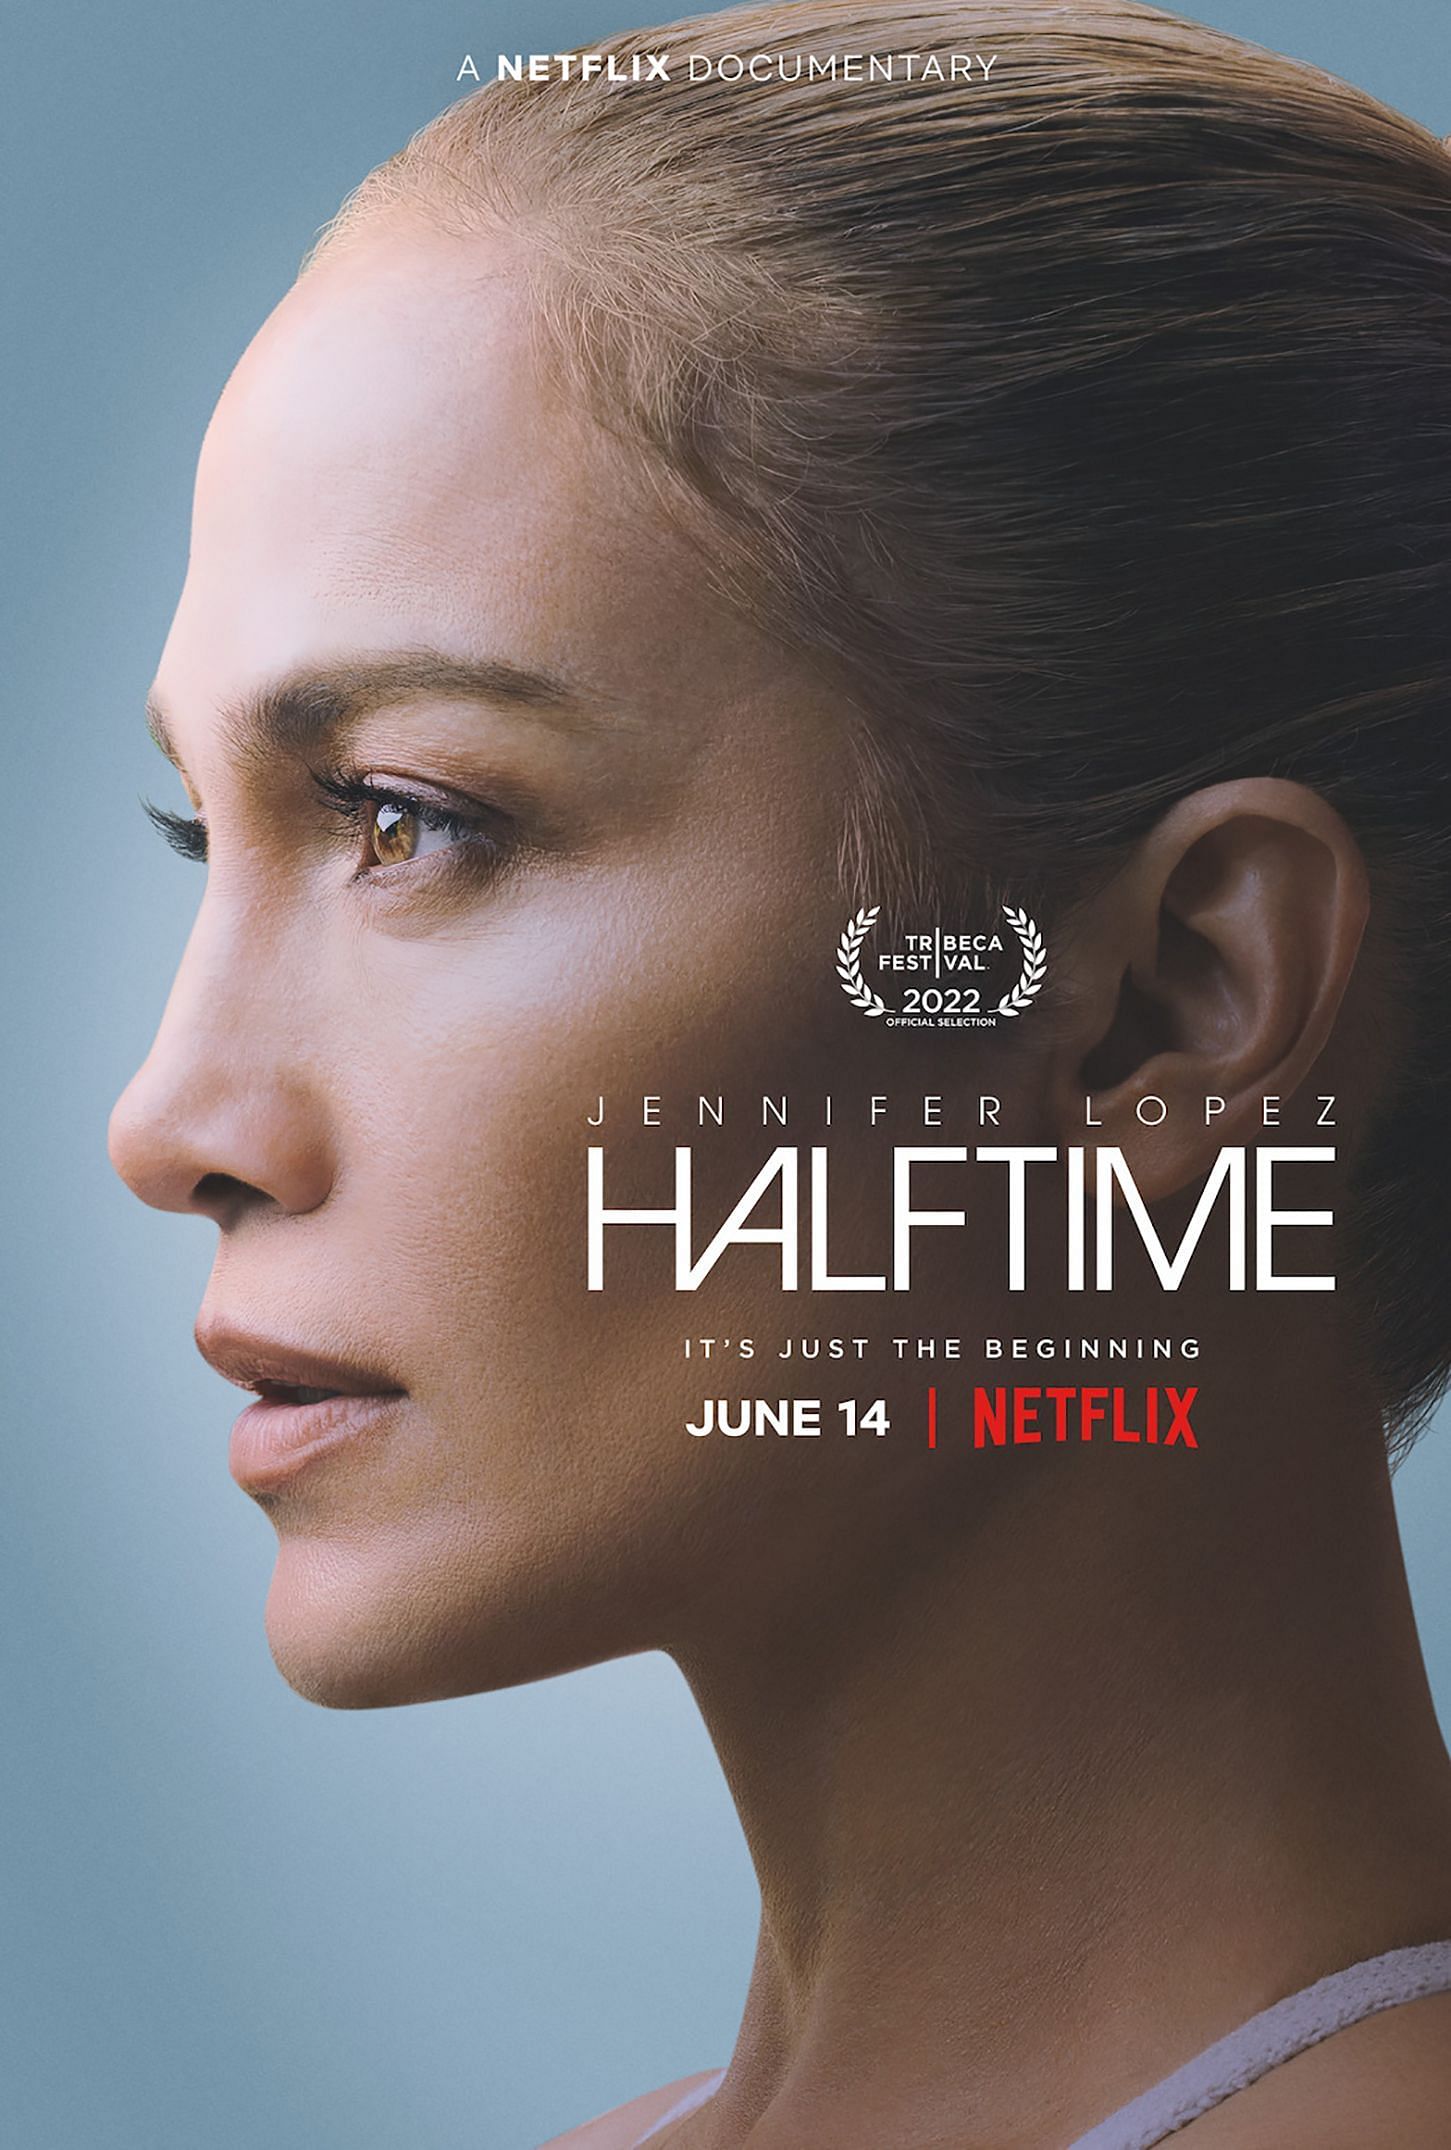 Halftime, 2022 (Image via Netflix)